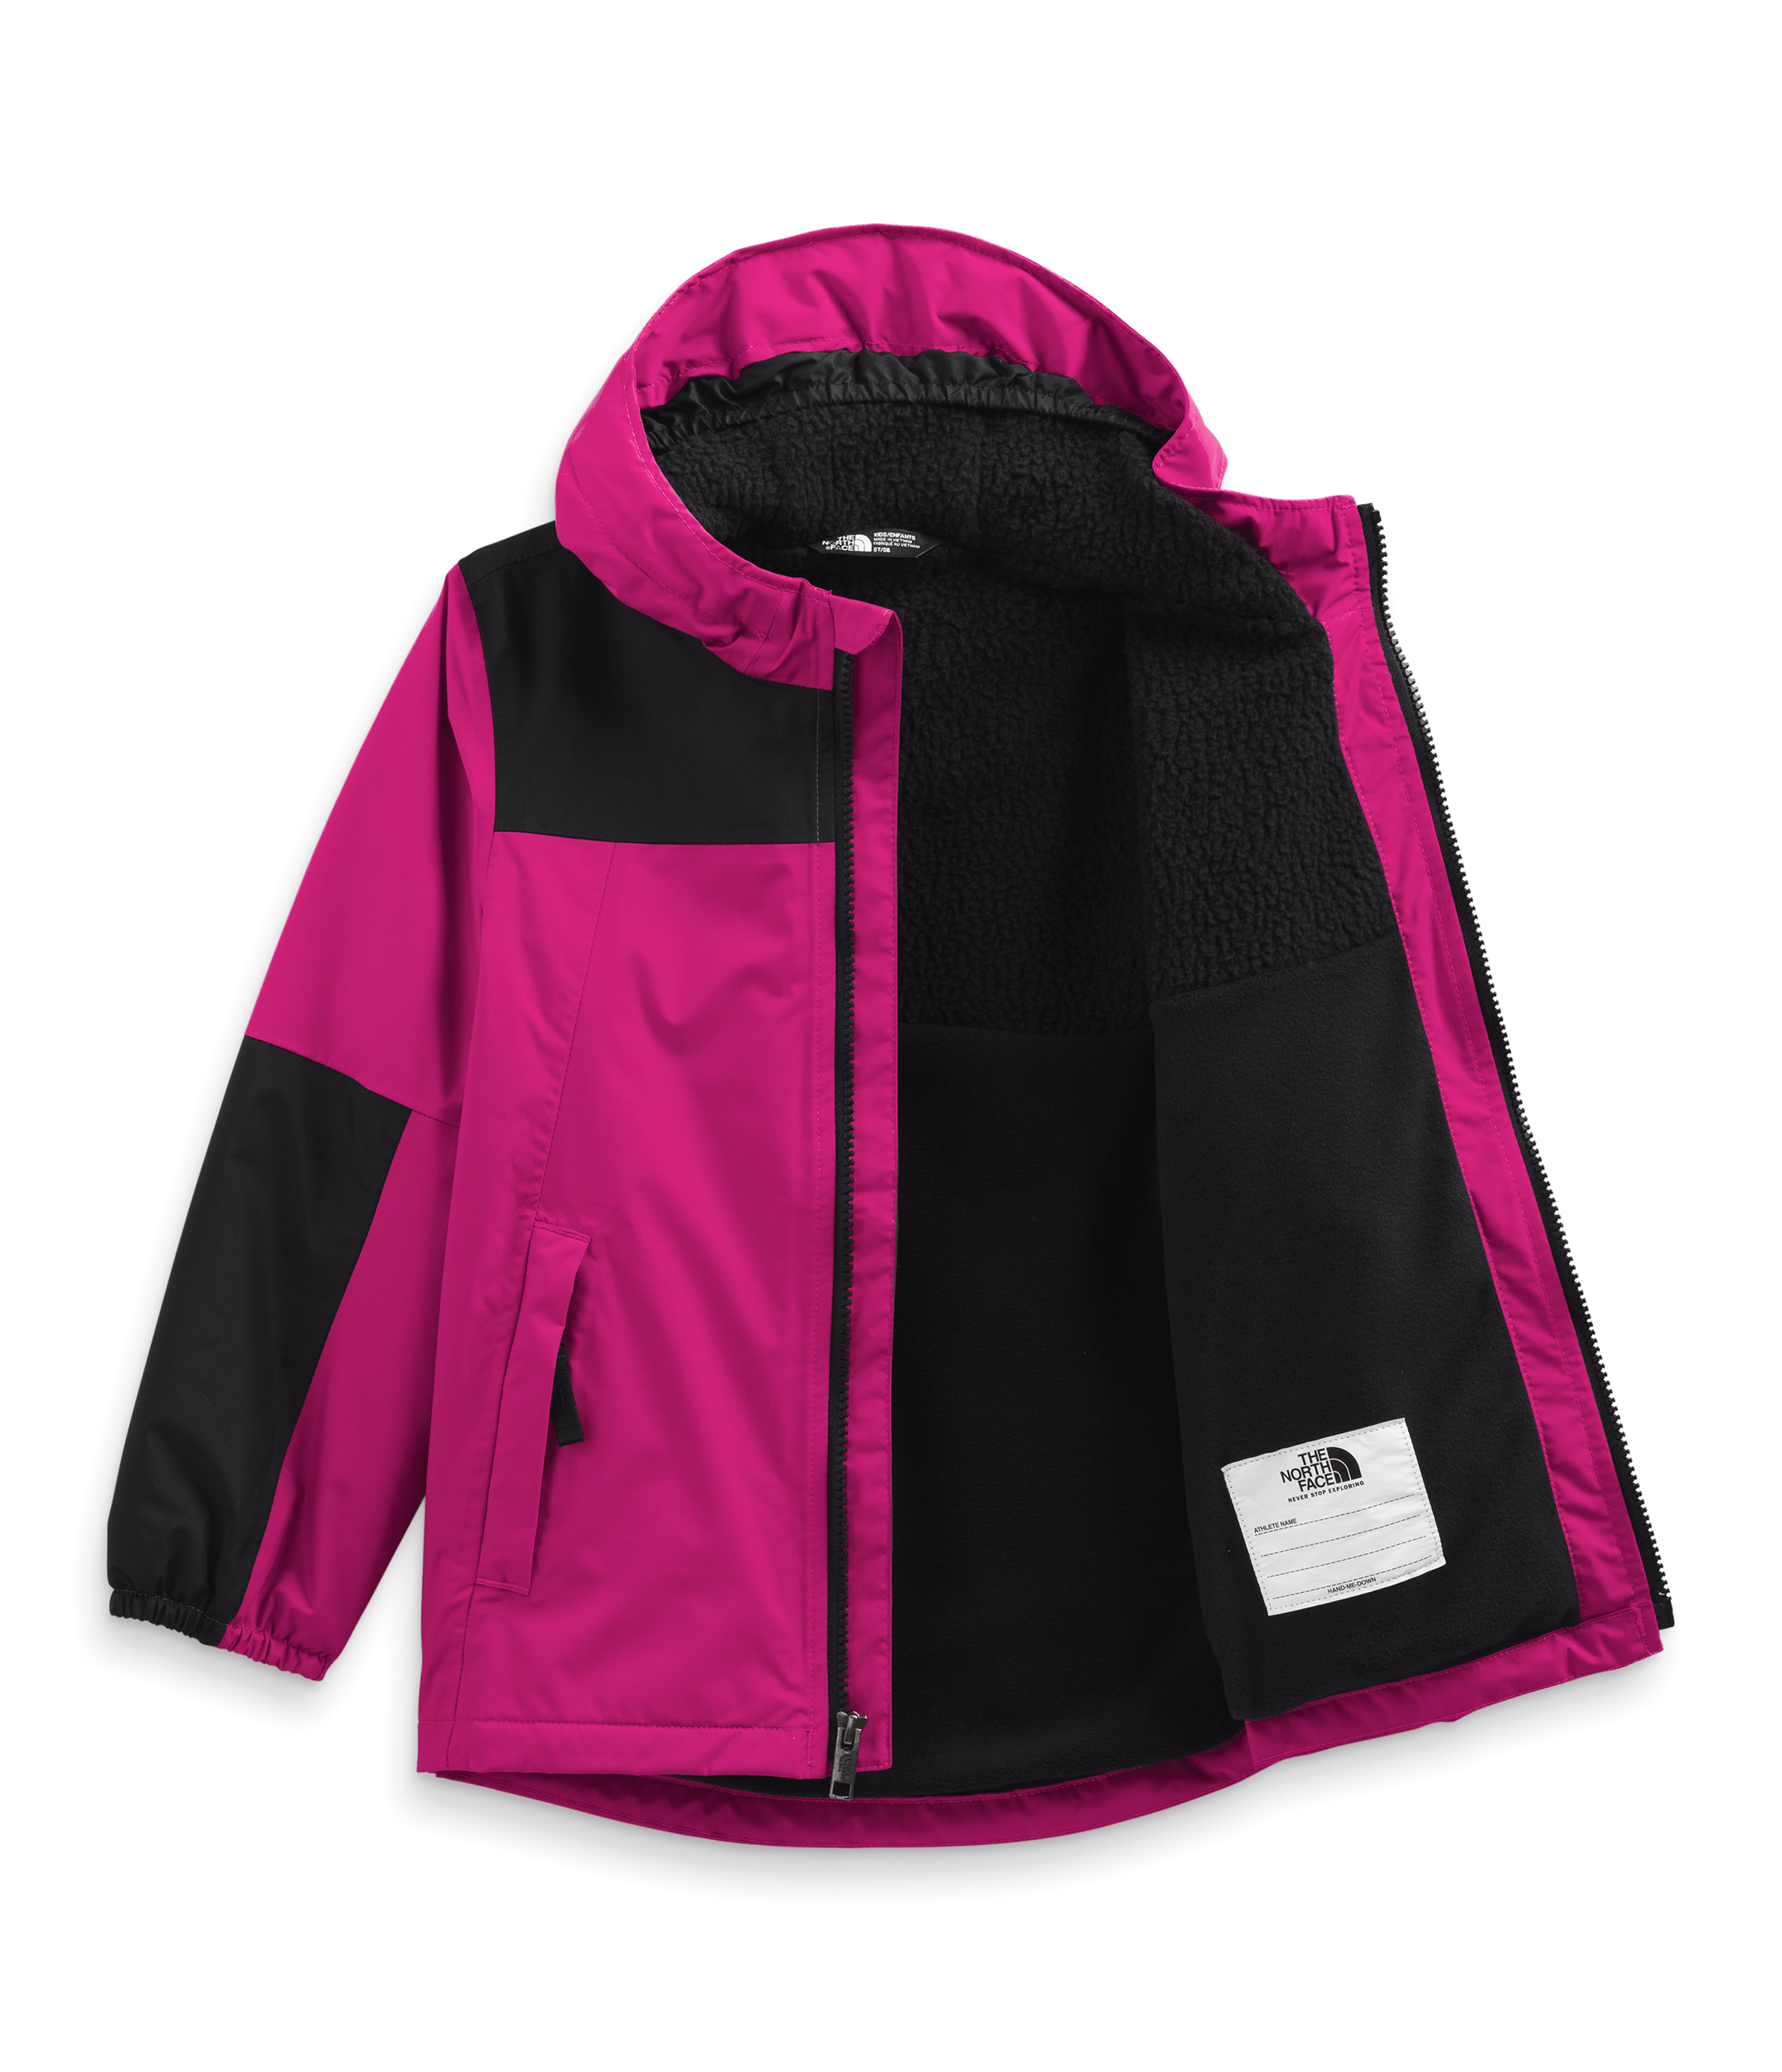 Prairie Summit Shop - The North Face Girls Warm Storm Rain Jacket